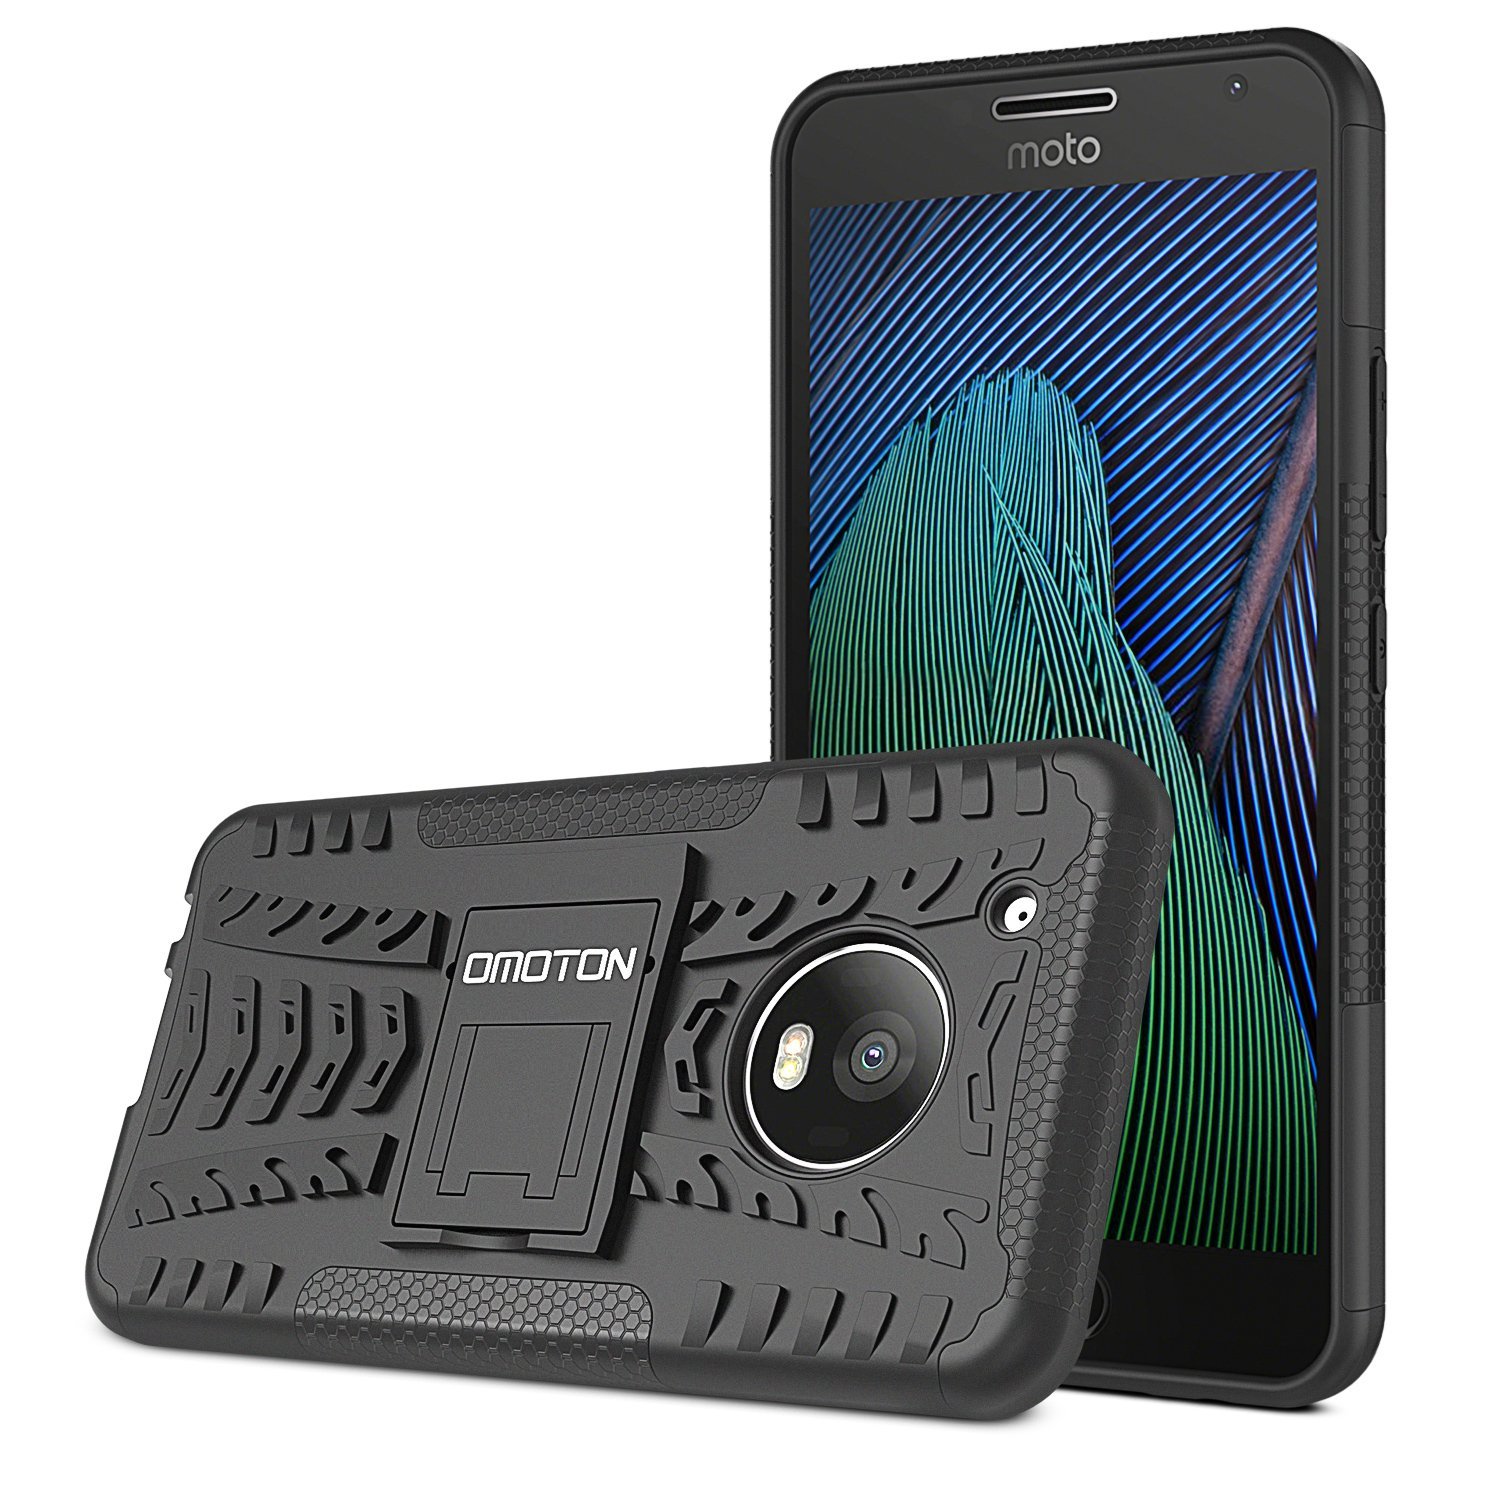 OMOTON Moto G5 Plus Case